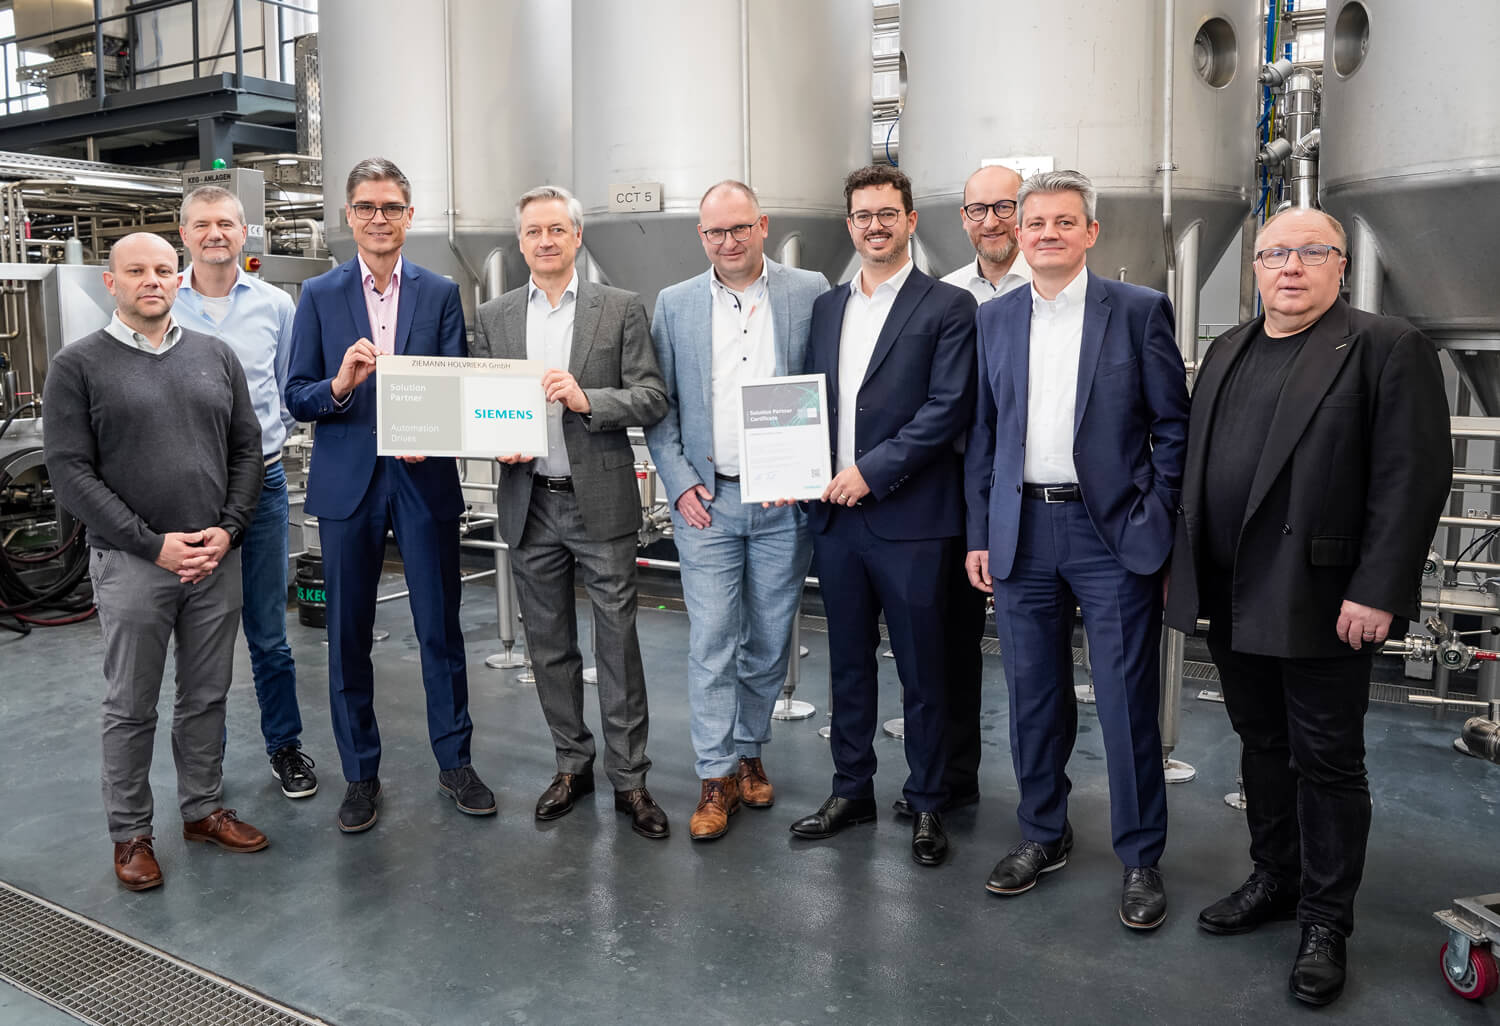 Ziemann Holvrieka is a new Siemens Solution Partner